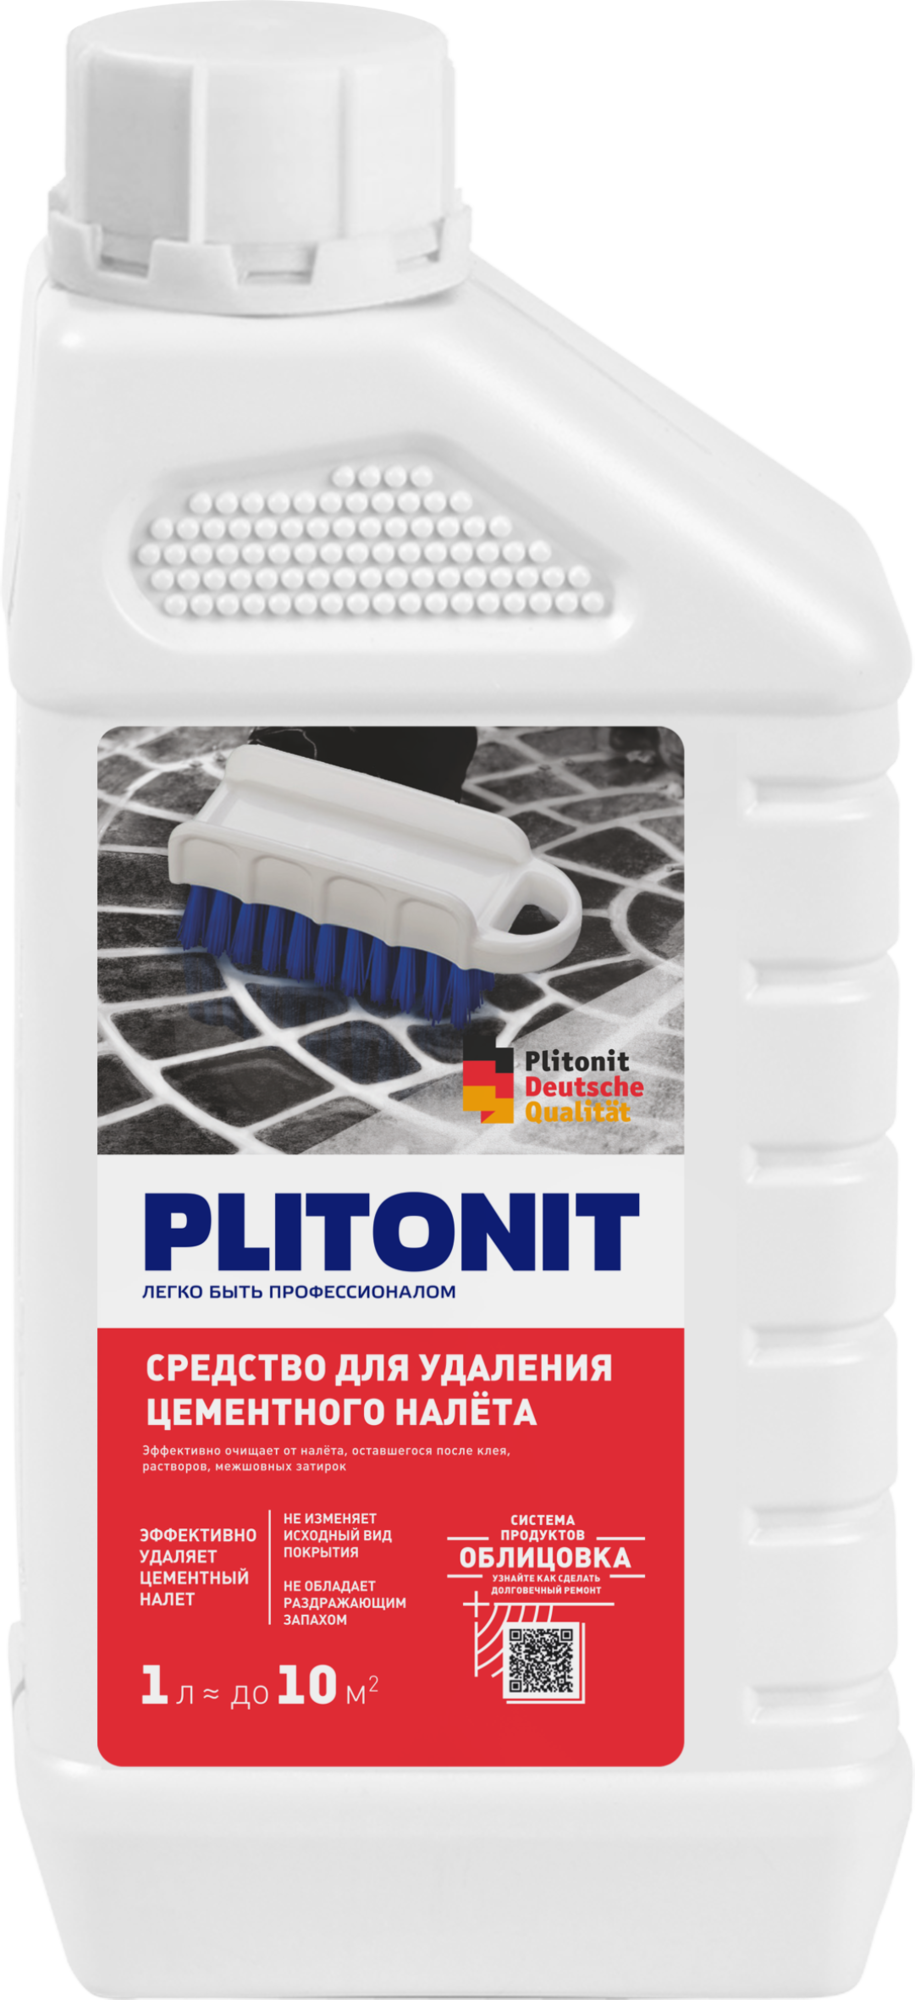 PLITONIT средство для удаления цементного налета, 1 л